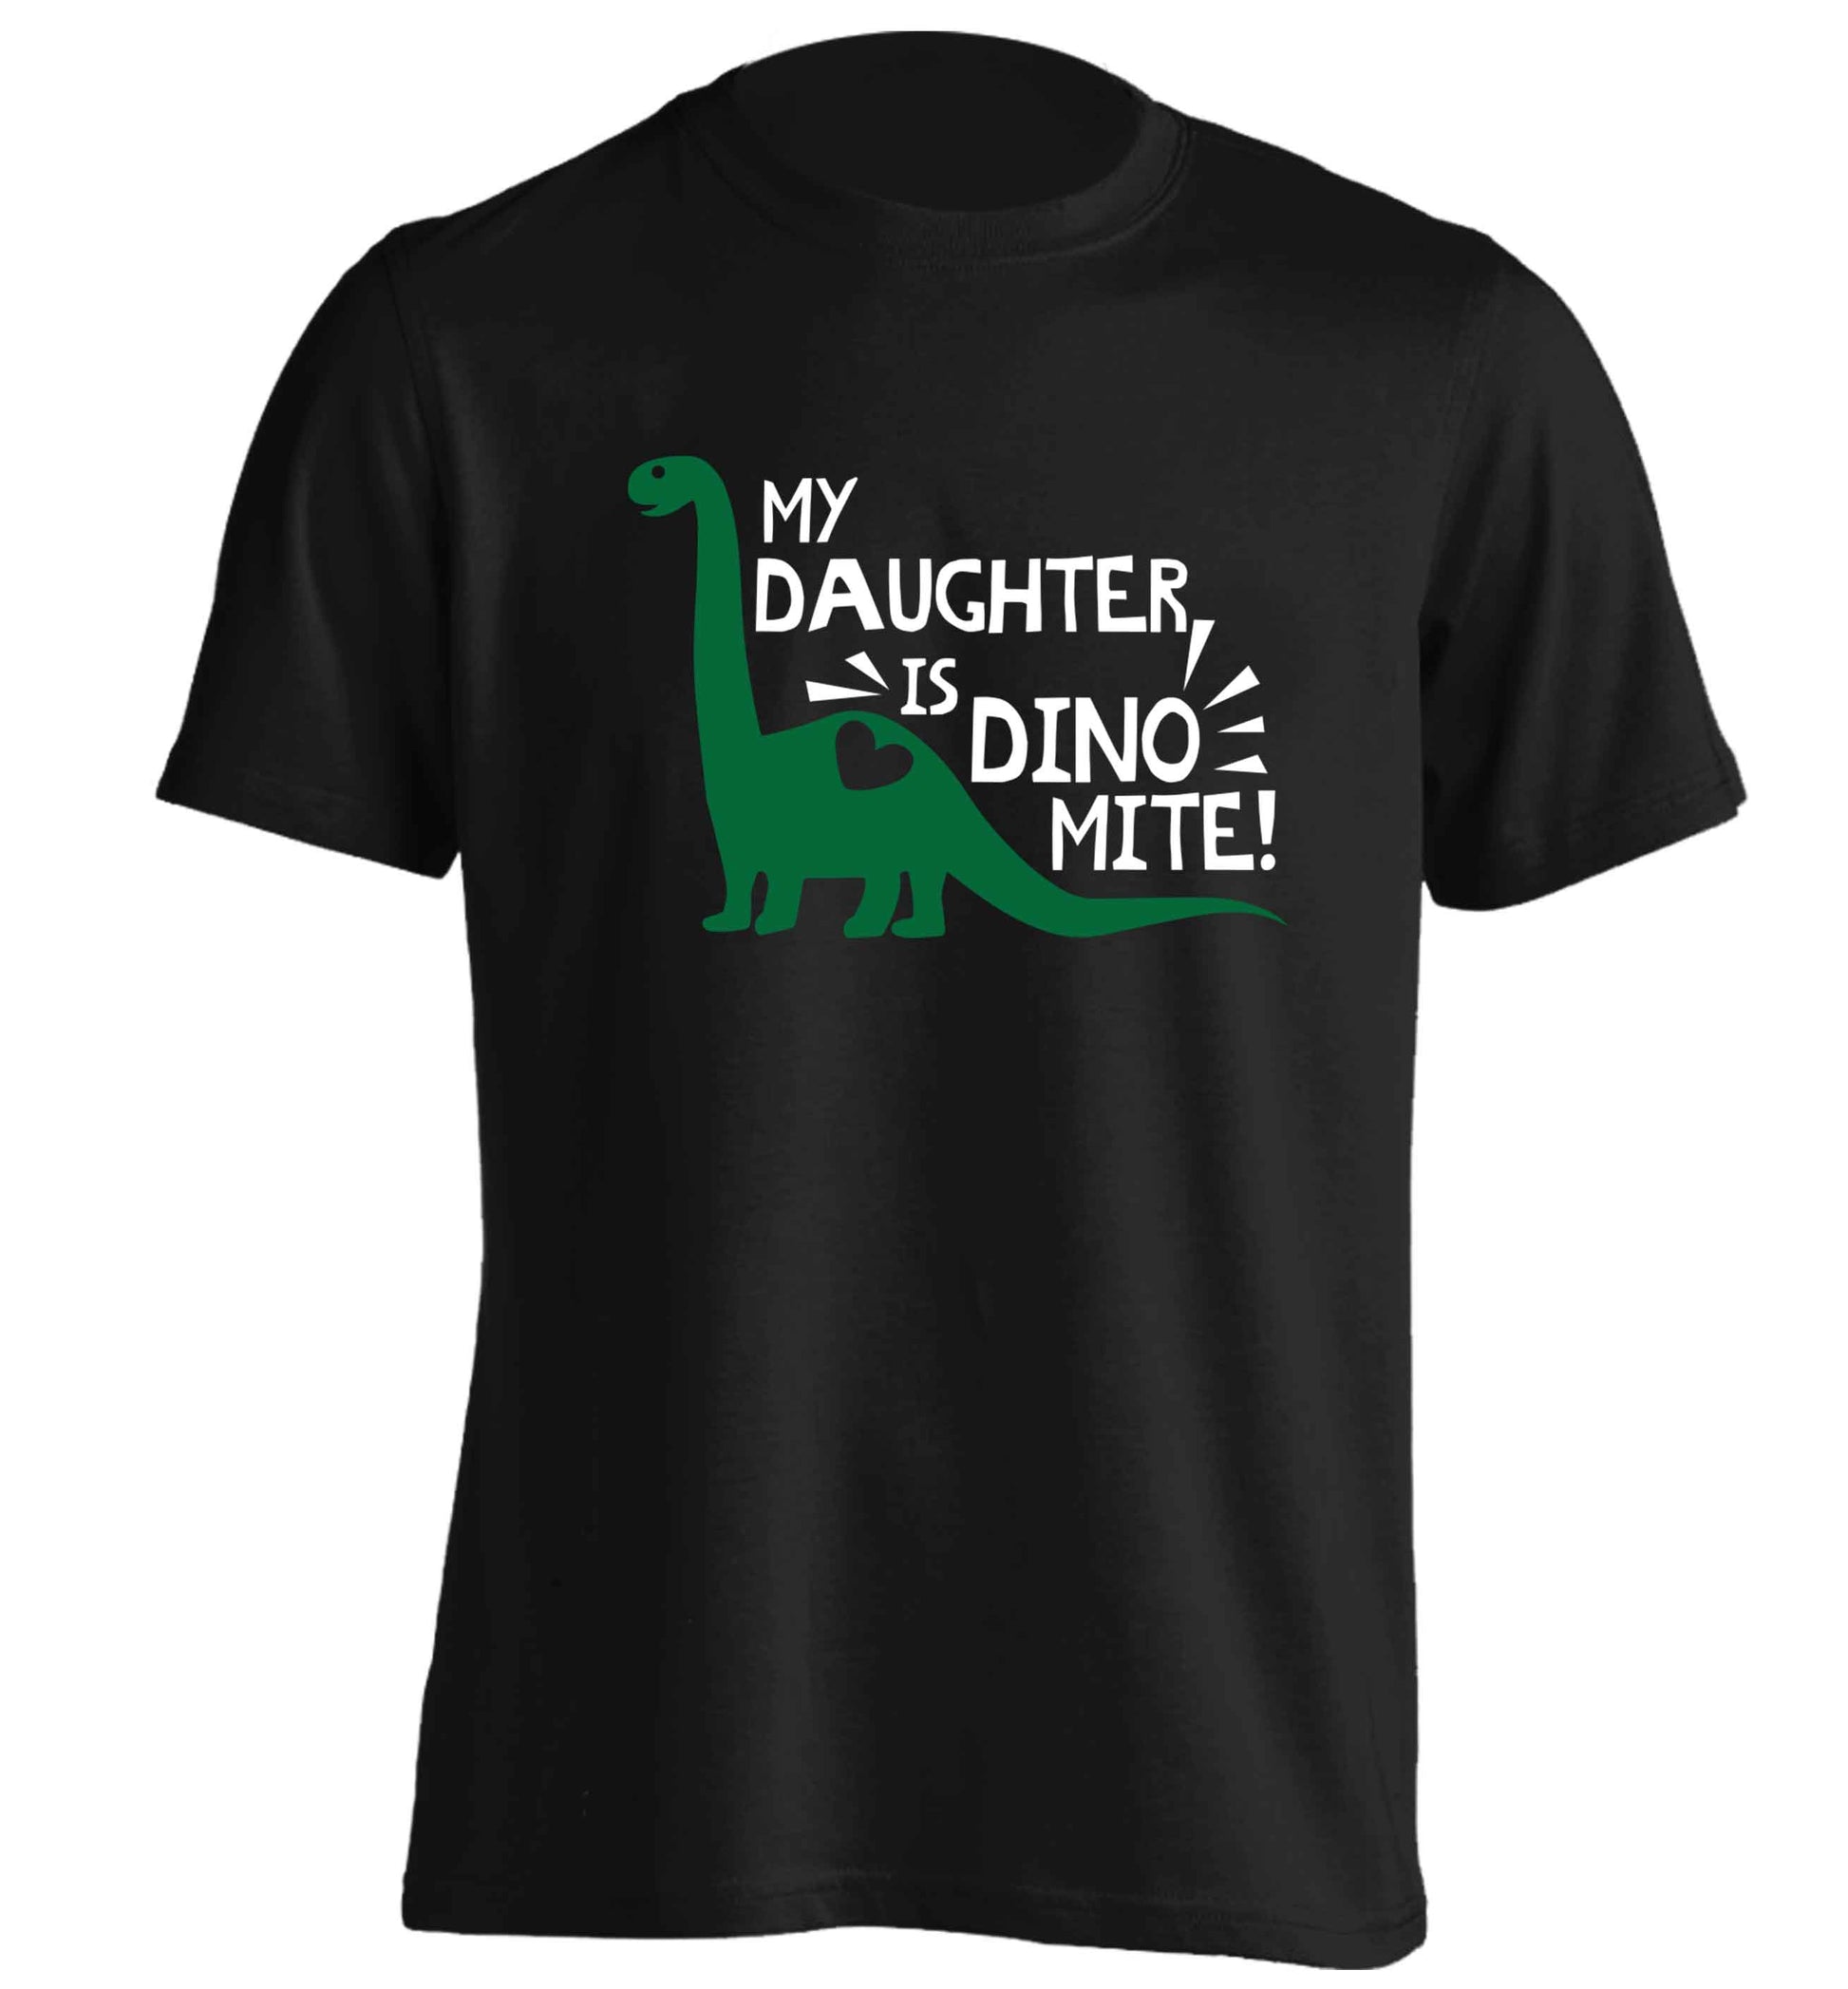 My daughter is dinomite! adults unisex black Tshirt 2XL